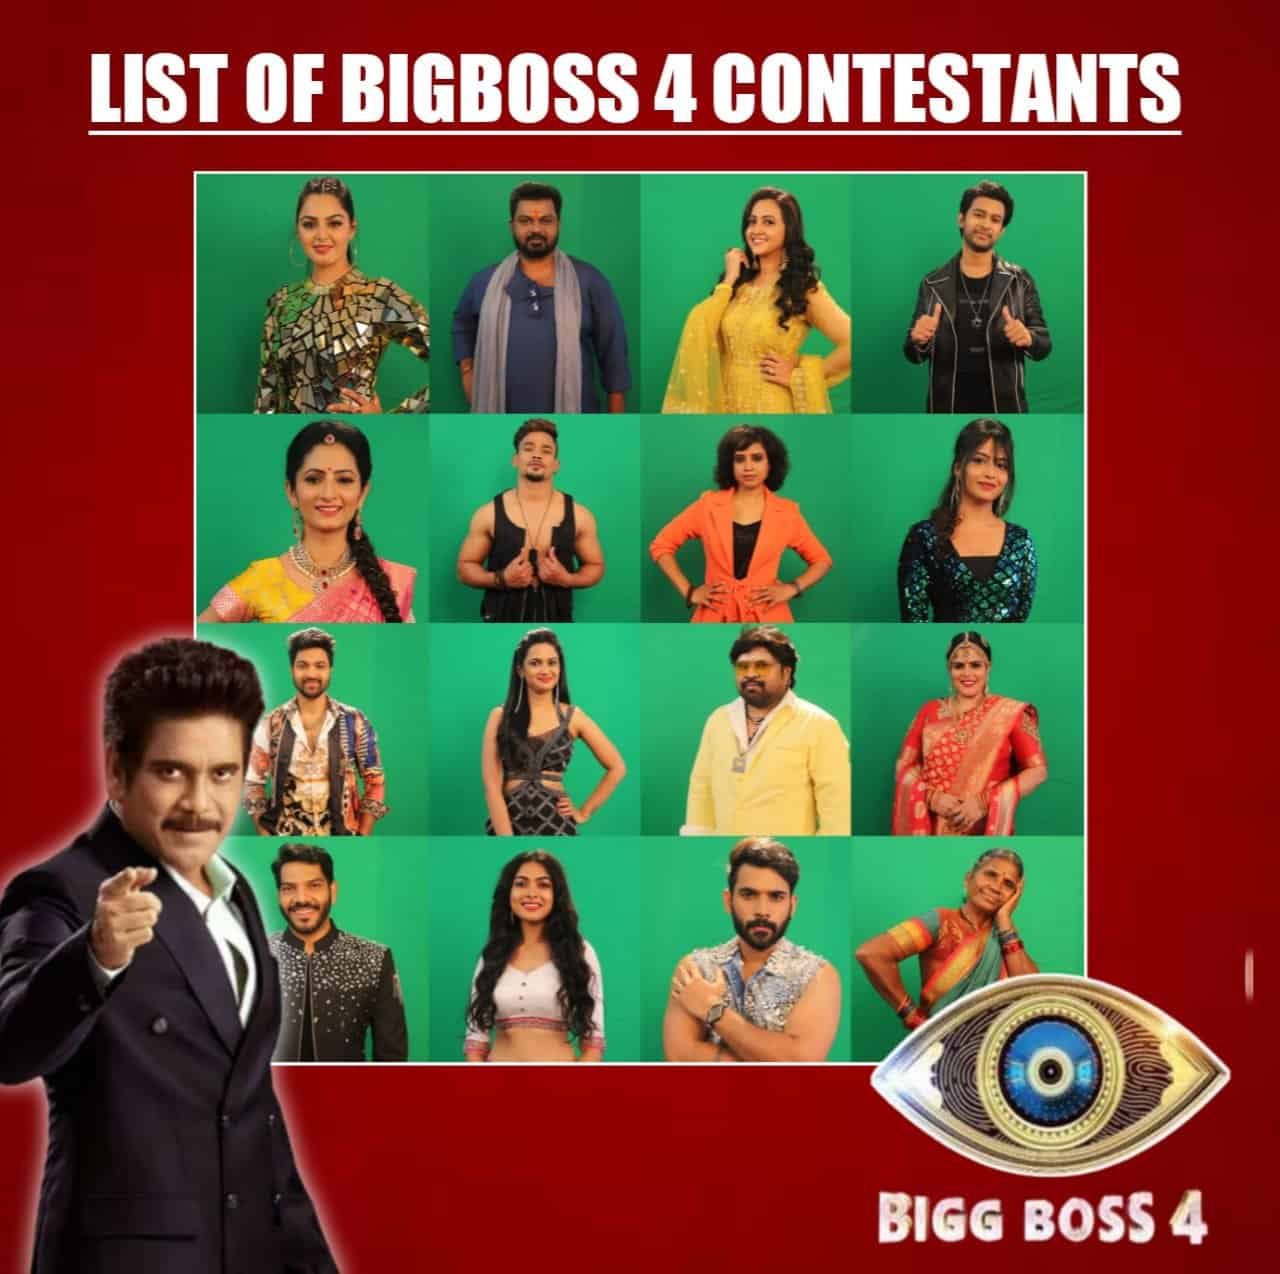 Bigg boss 4 Contestants